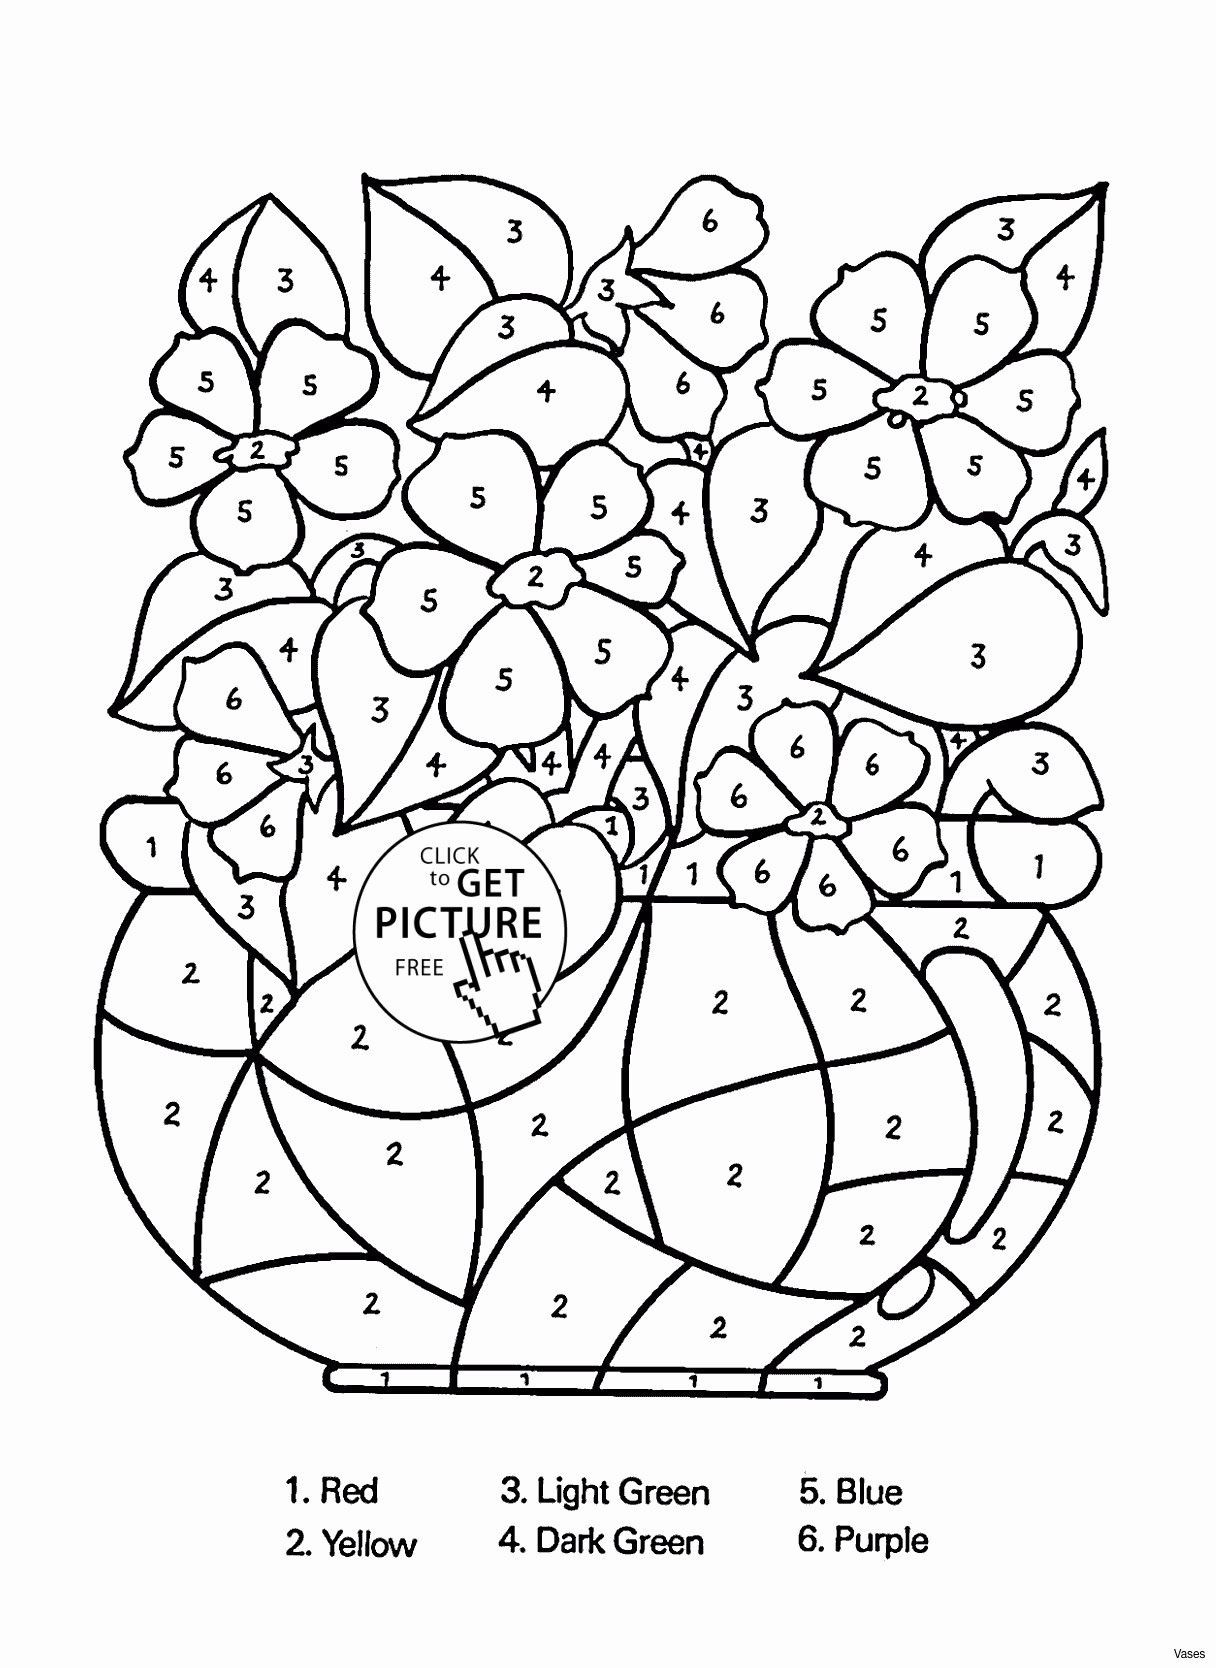 12 Stunning Vintage Flower Vase 2024 free download vintage flower vase of iphone wallpaper yellow flowers inspirational vases flower vase pertaining to iphone wallpaper yellow flowers inspirational vases flower vase coloring page pages flowe